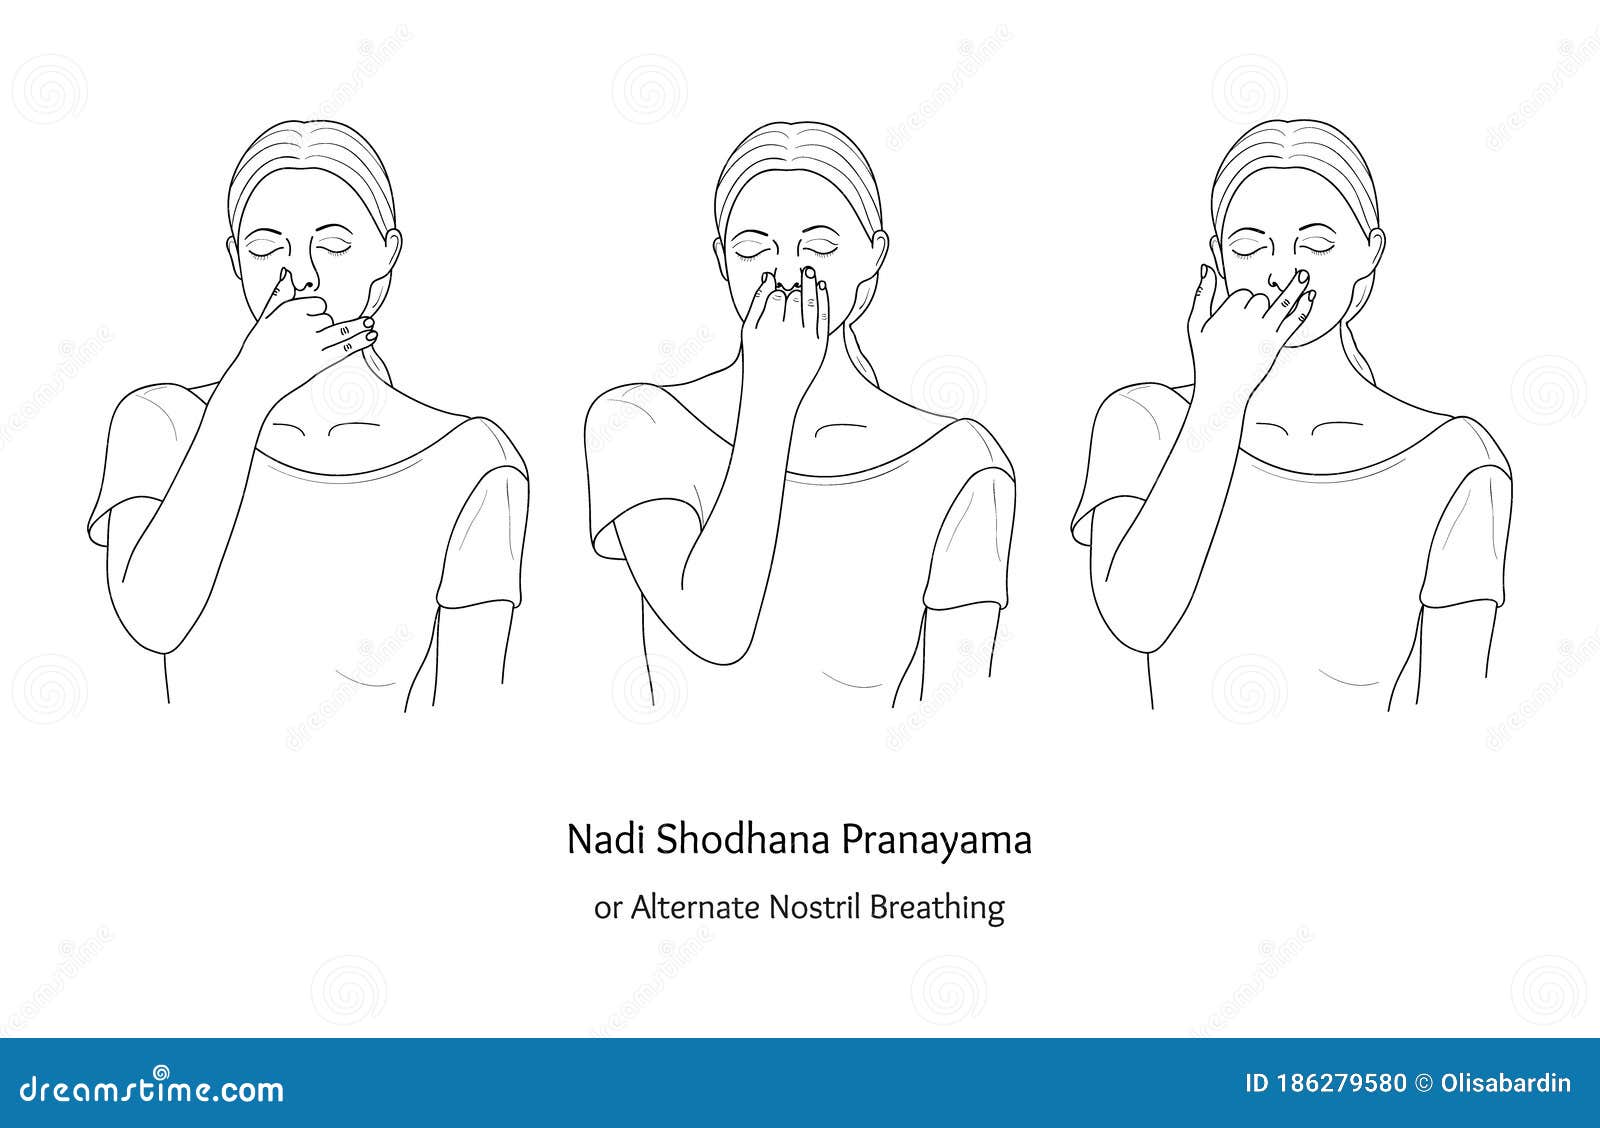 nadi shodhana pranayama or alternate nostril breathing. 